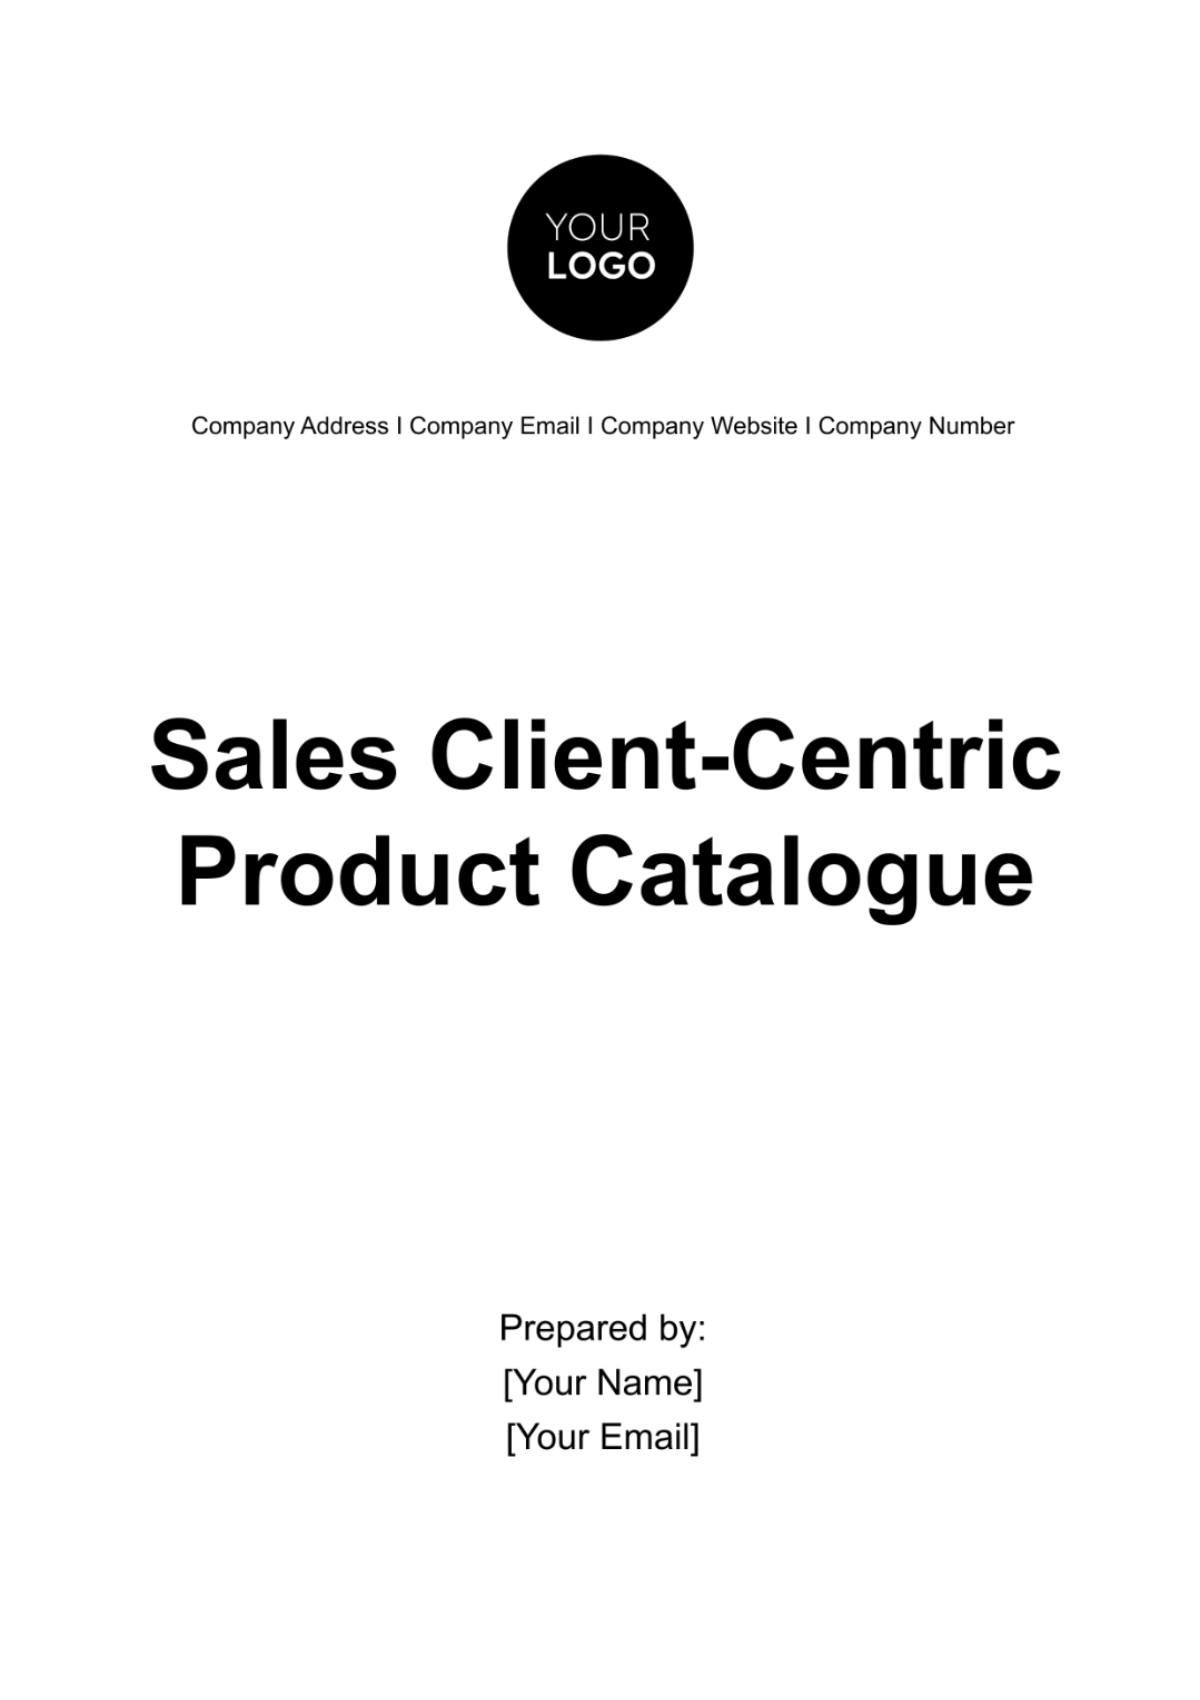 Sales Client-Centric Product Catalogue Template